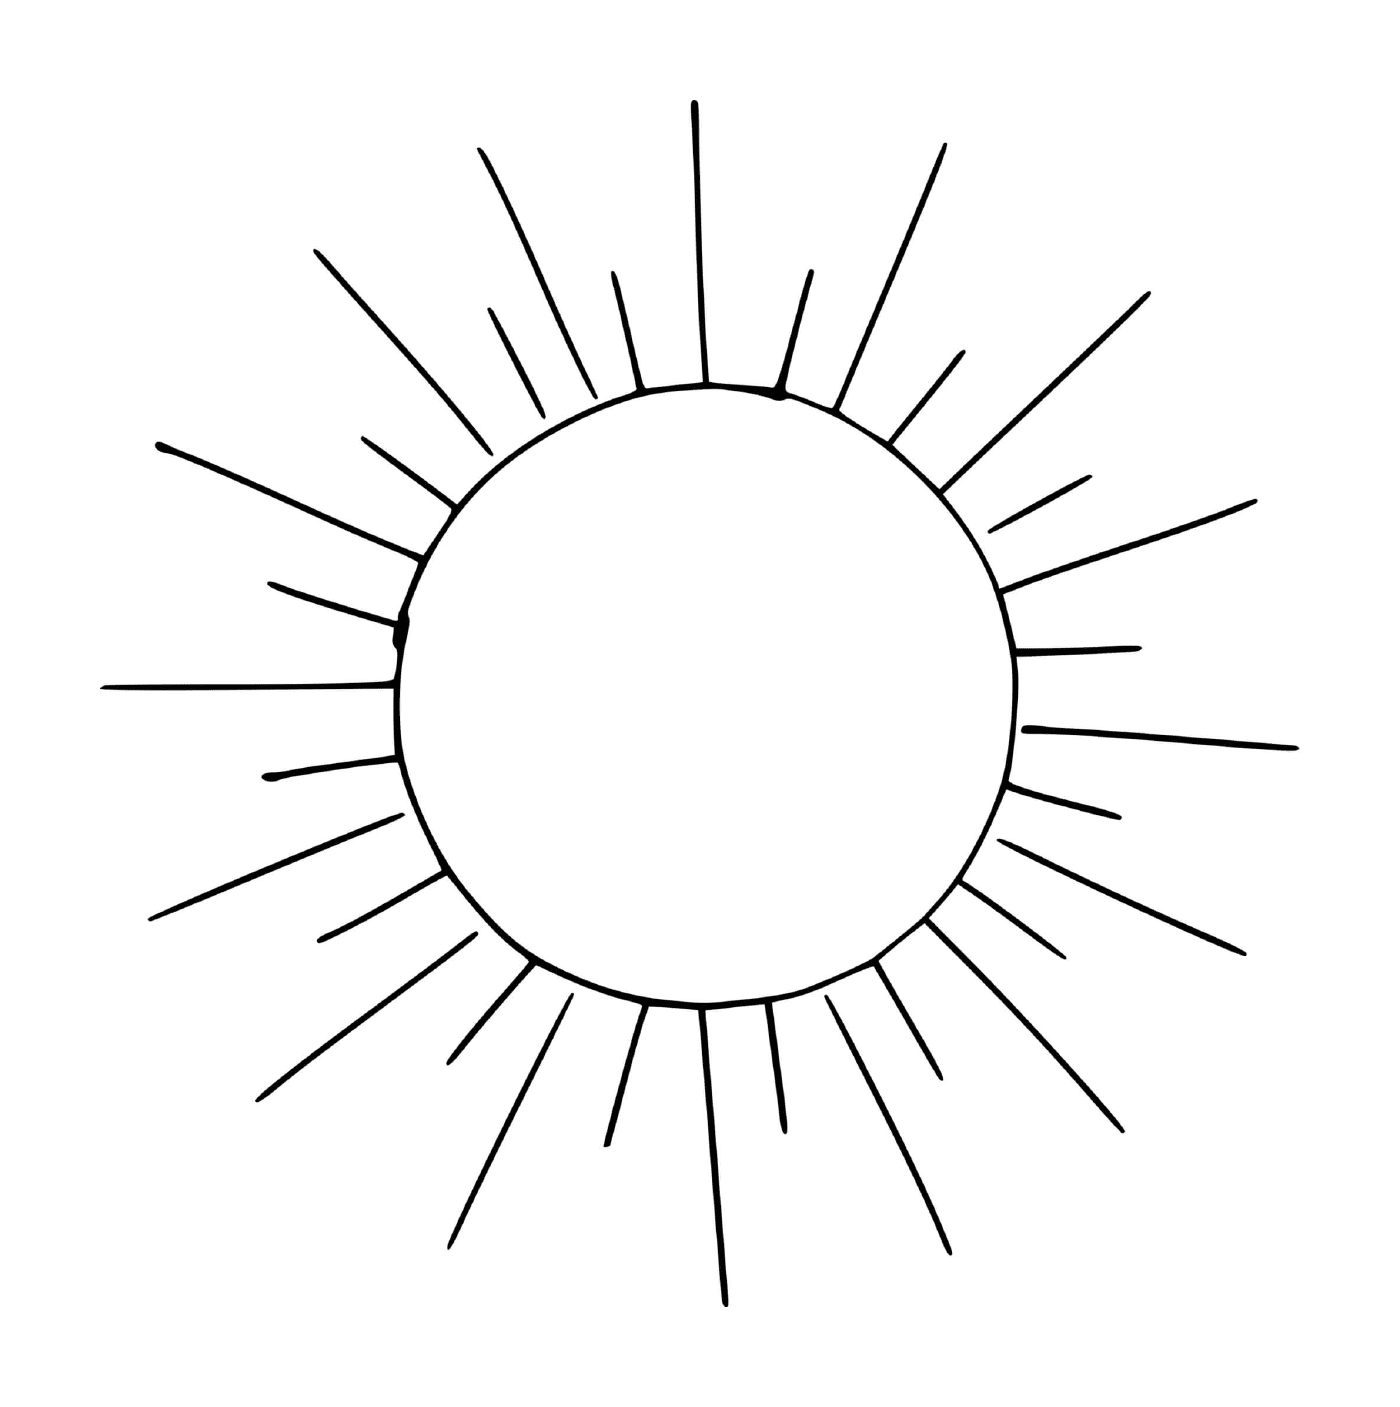  Sun close to the earth 